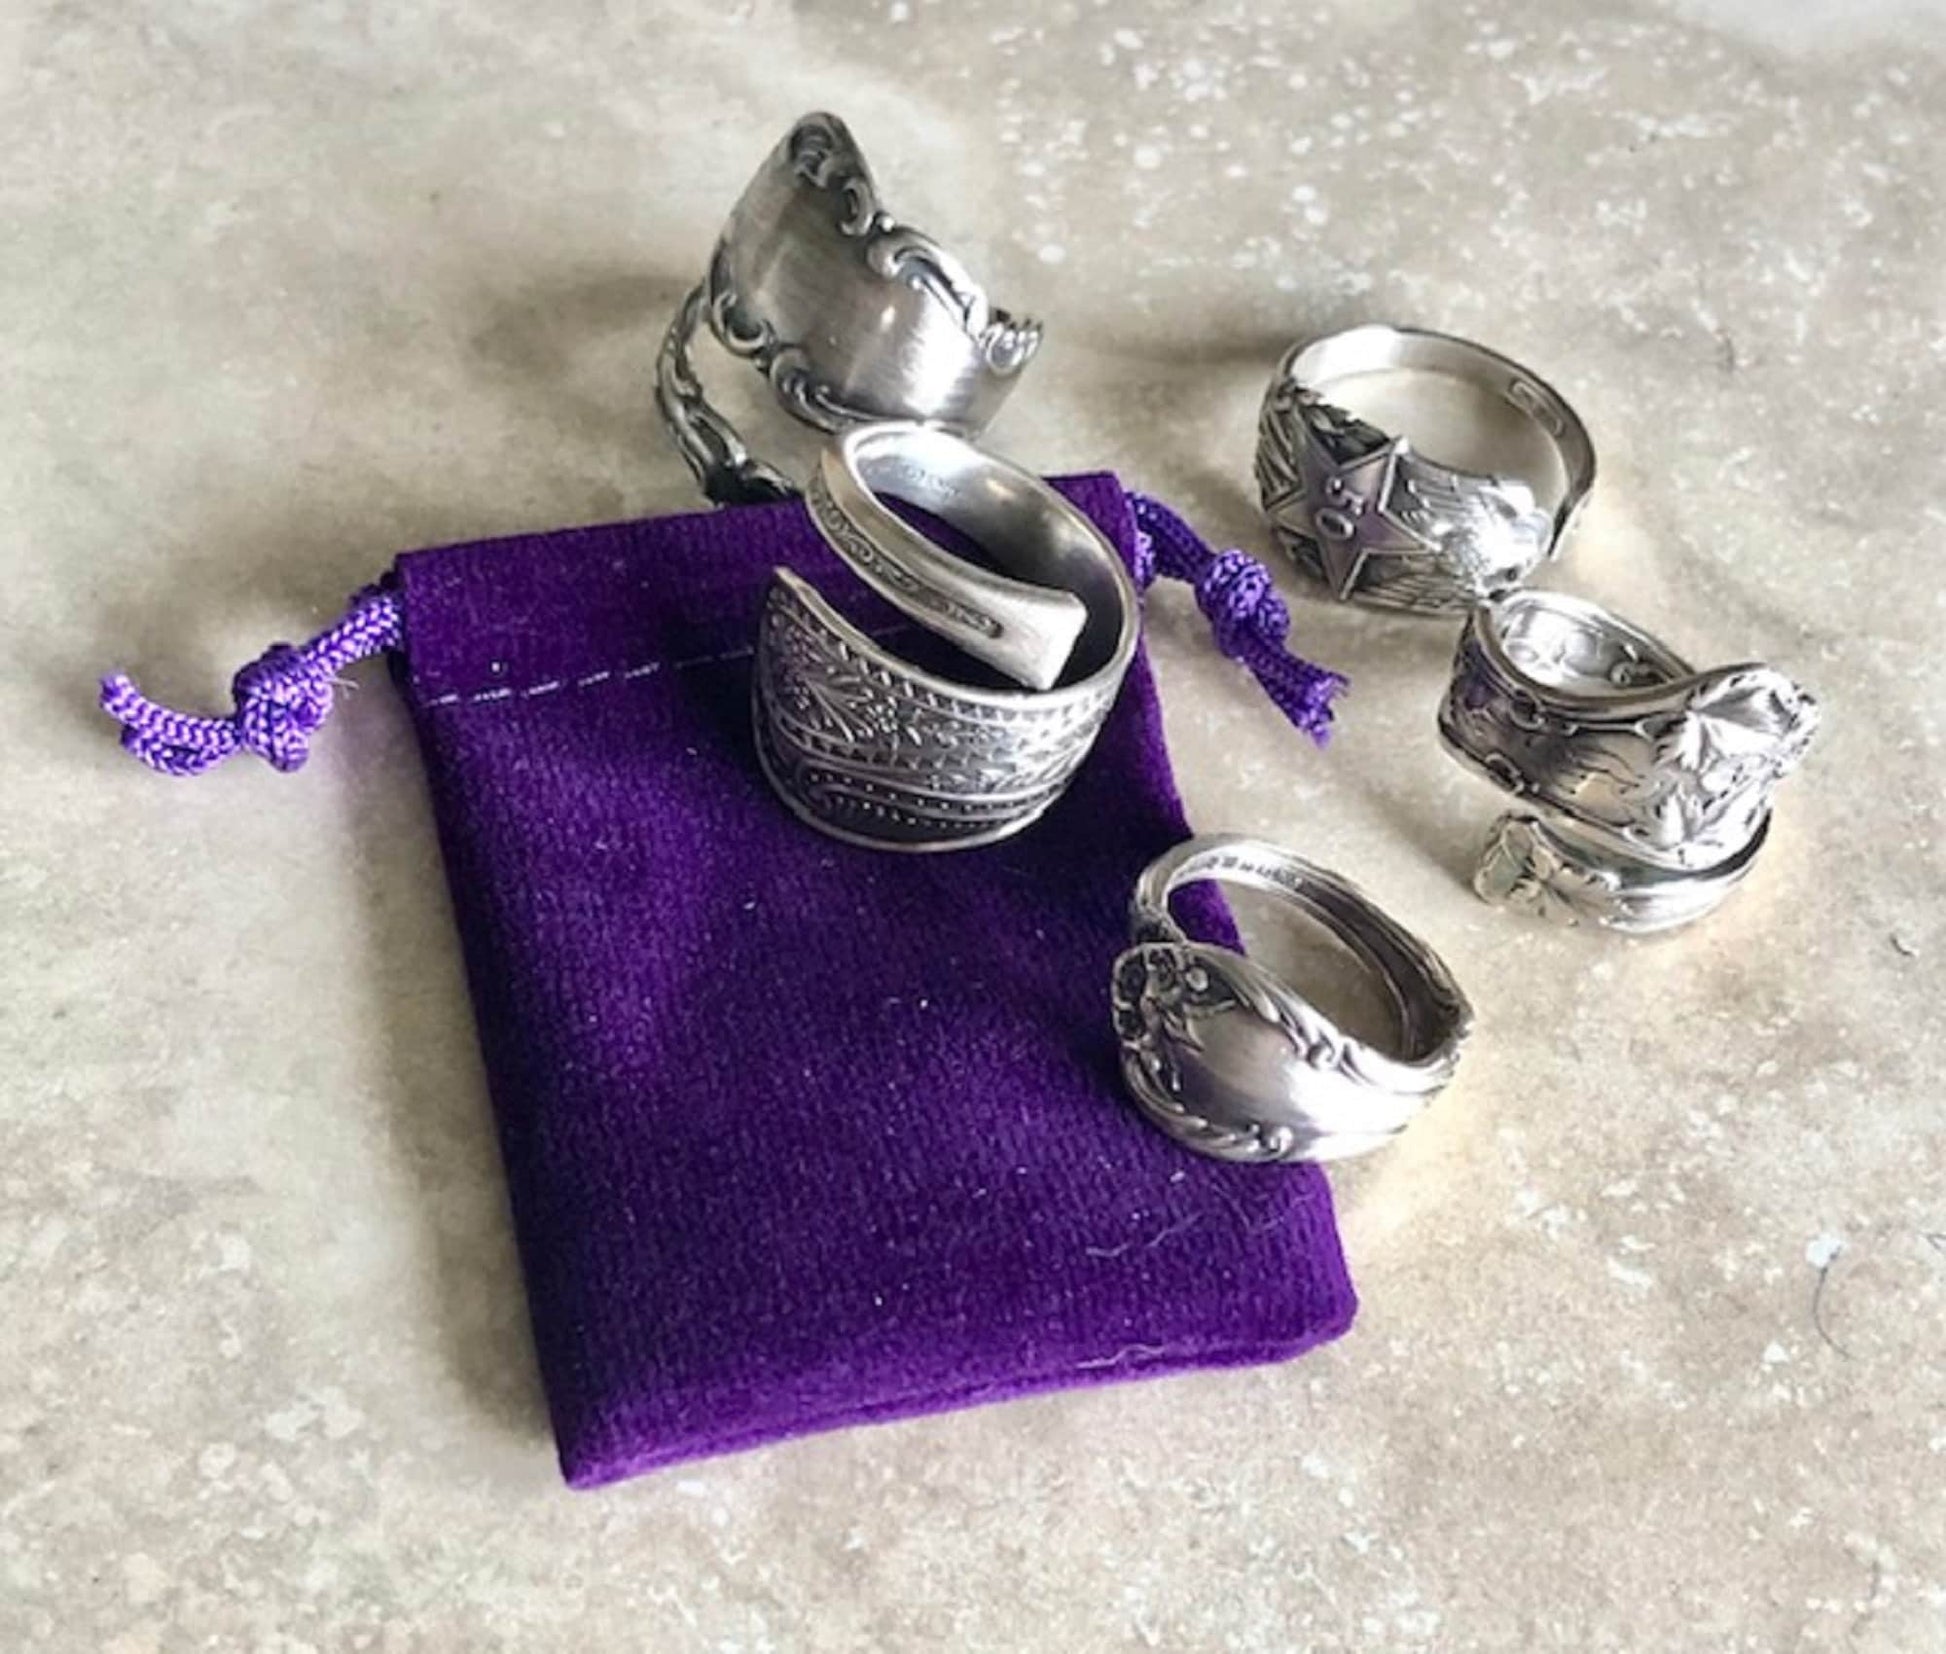 Owl Wild Rose 925 Sterling Silver Spoon Ring, Prudence, Wisdom, Strength, Wit, Love, Vintage Silverware Jewelry, Adjustable Handmade